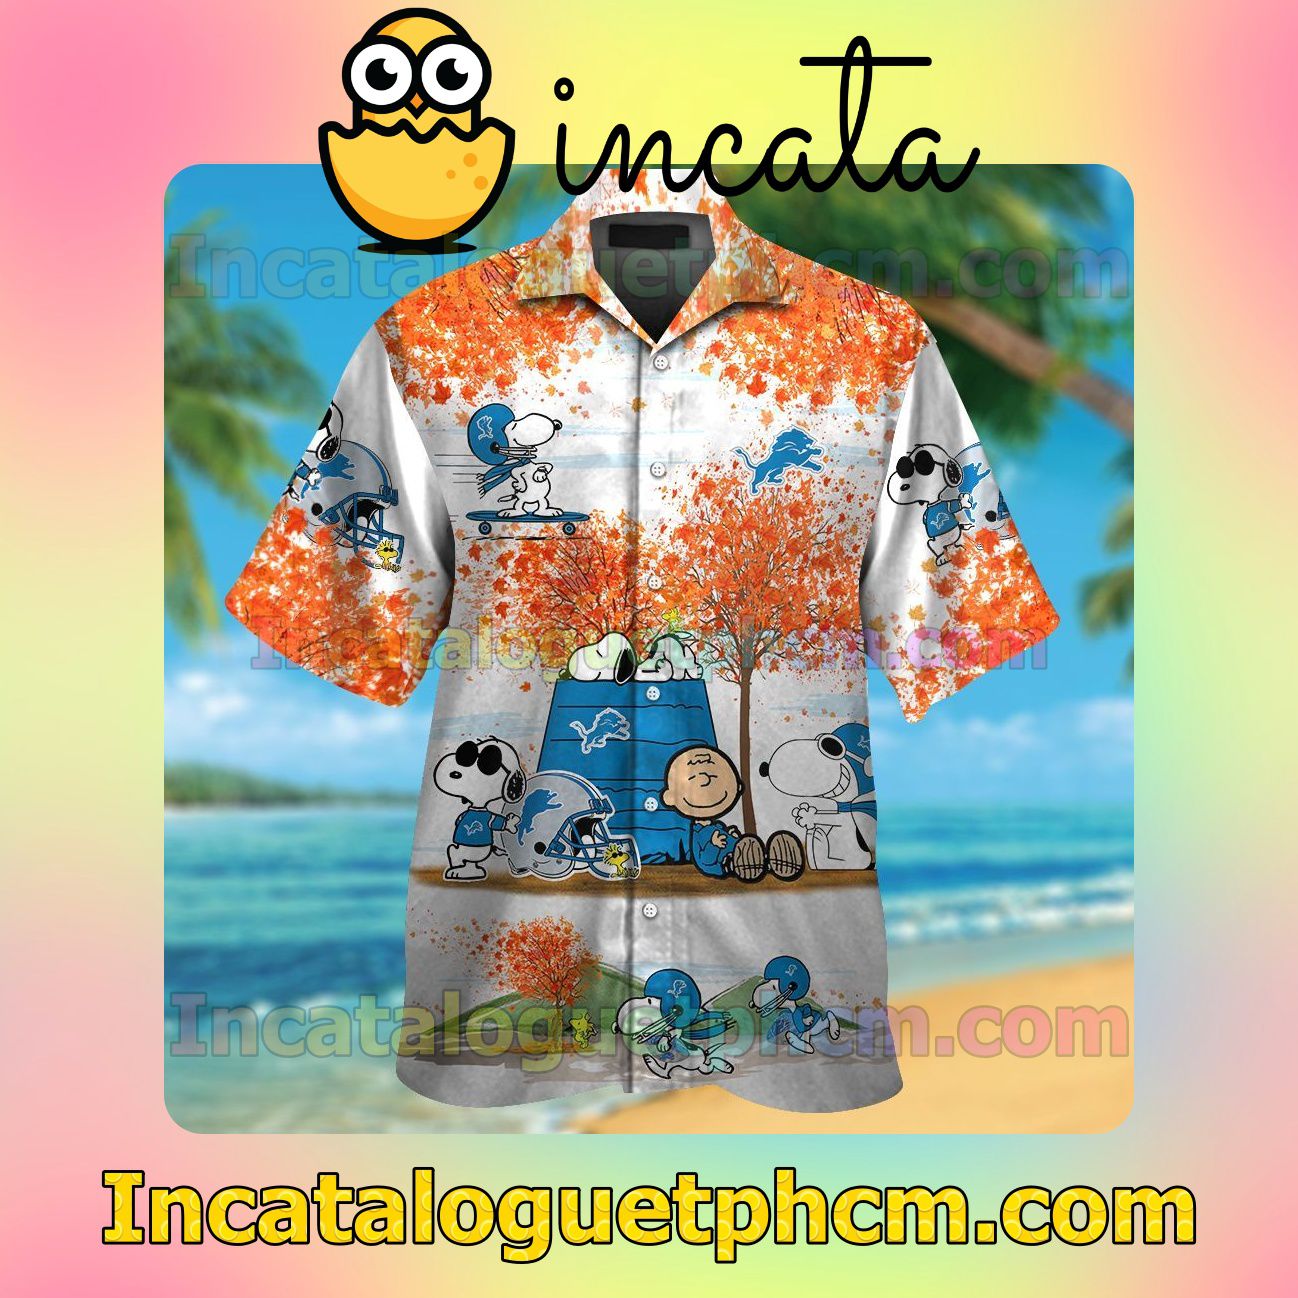 Detroit Lions Snoopy Autumn Beach Vacation Shirt, Swim Shorts